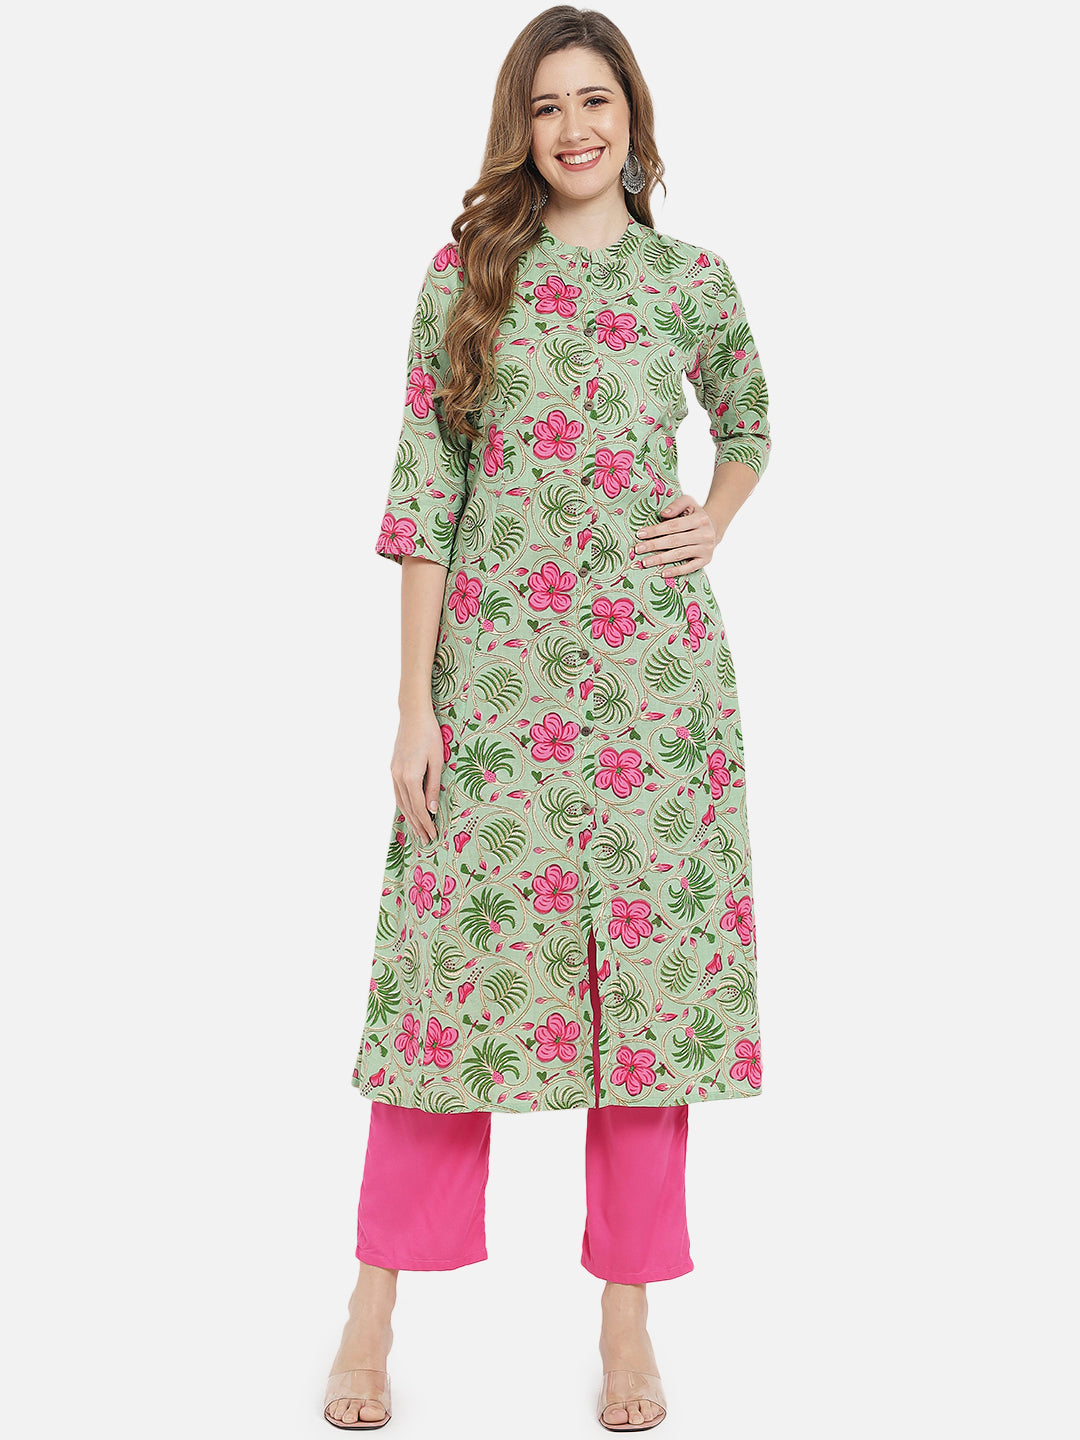 Women's Green & Pink Floral Printed Cotton Kurta - MEERANSHI